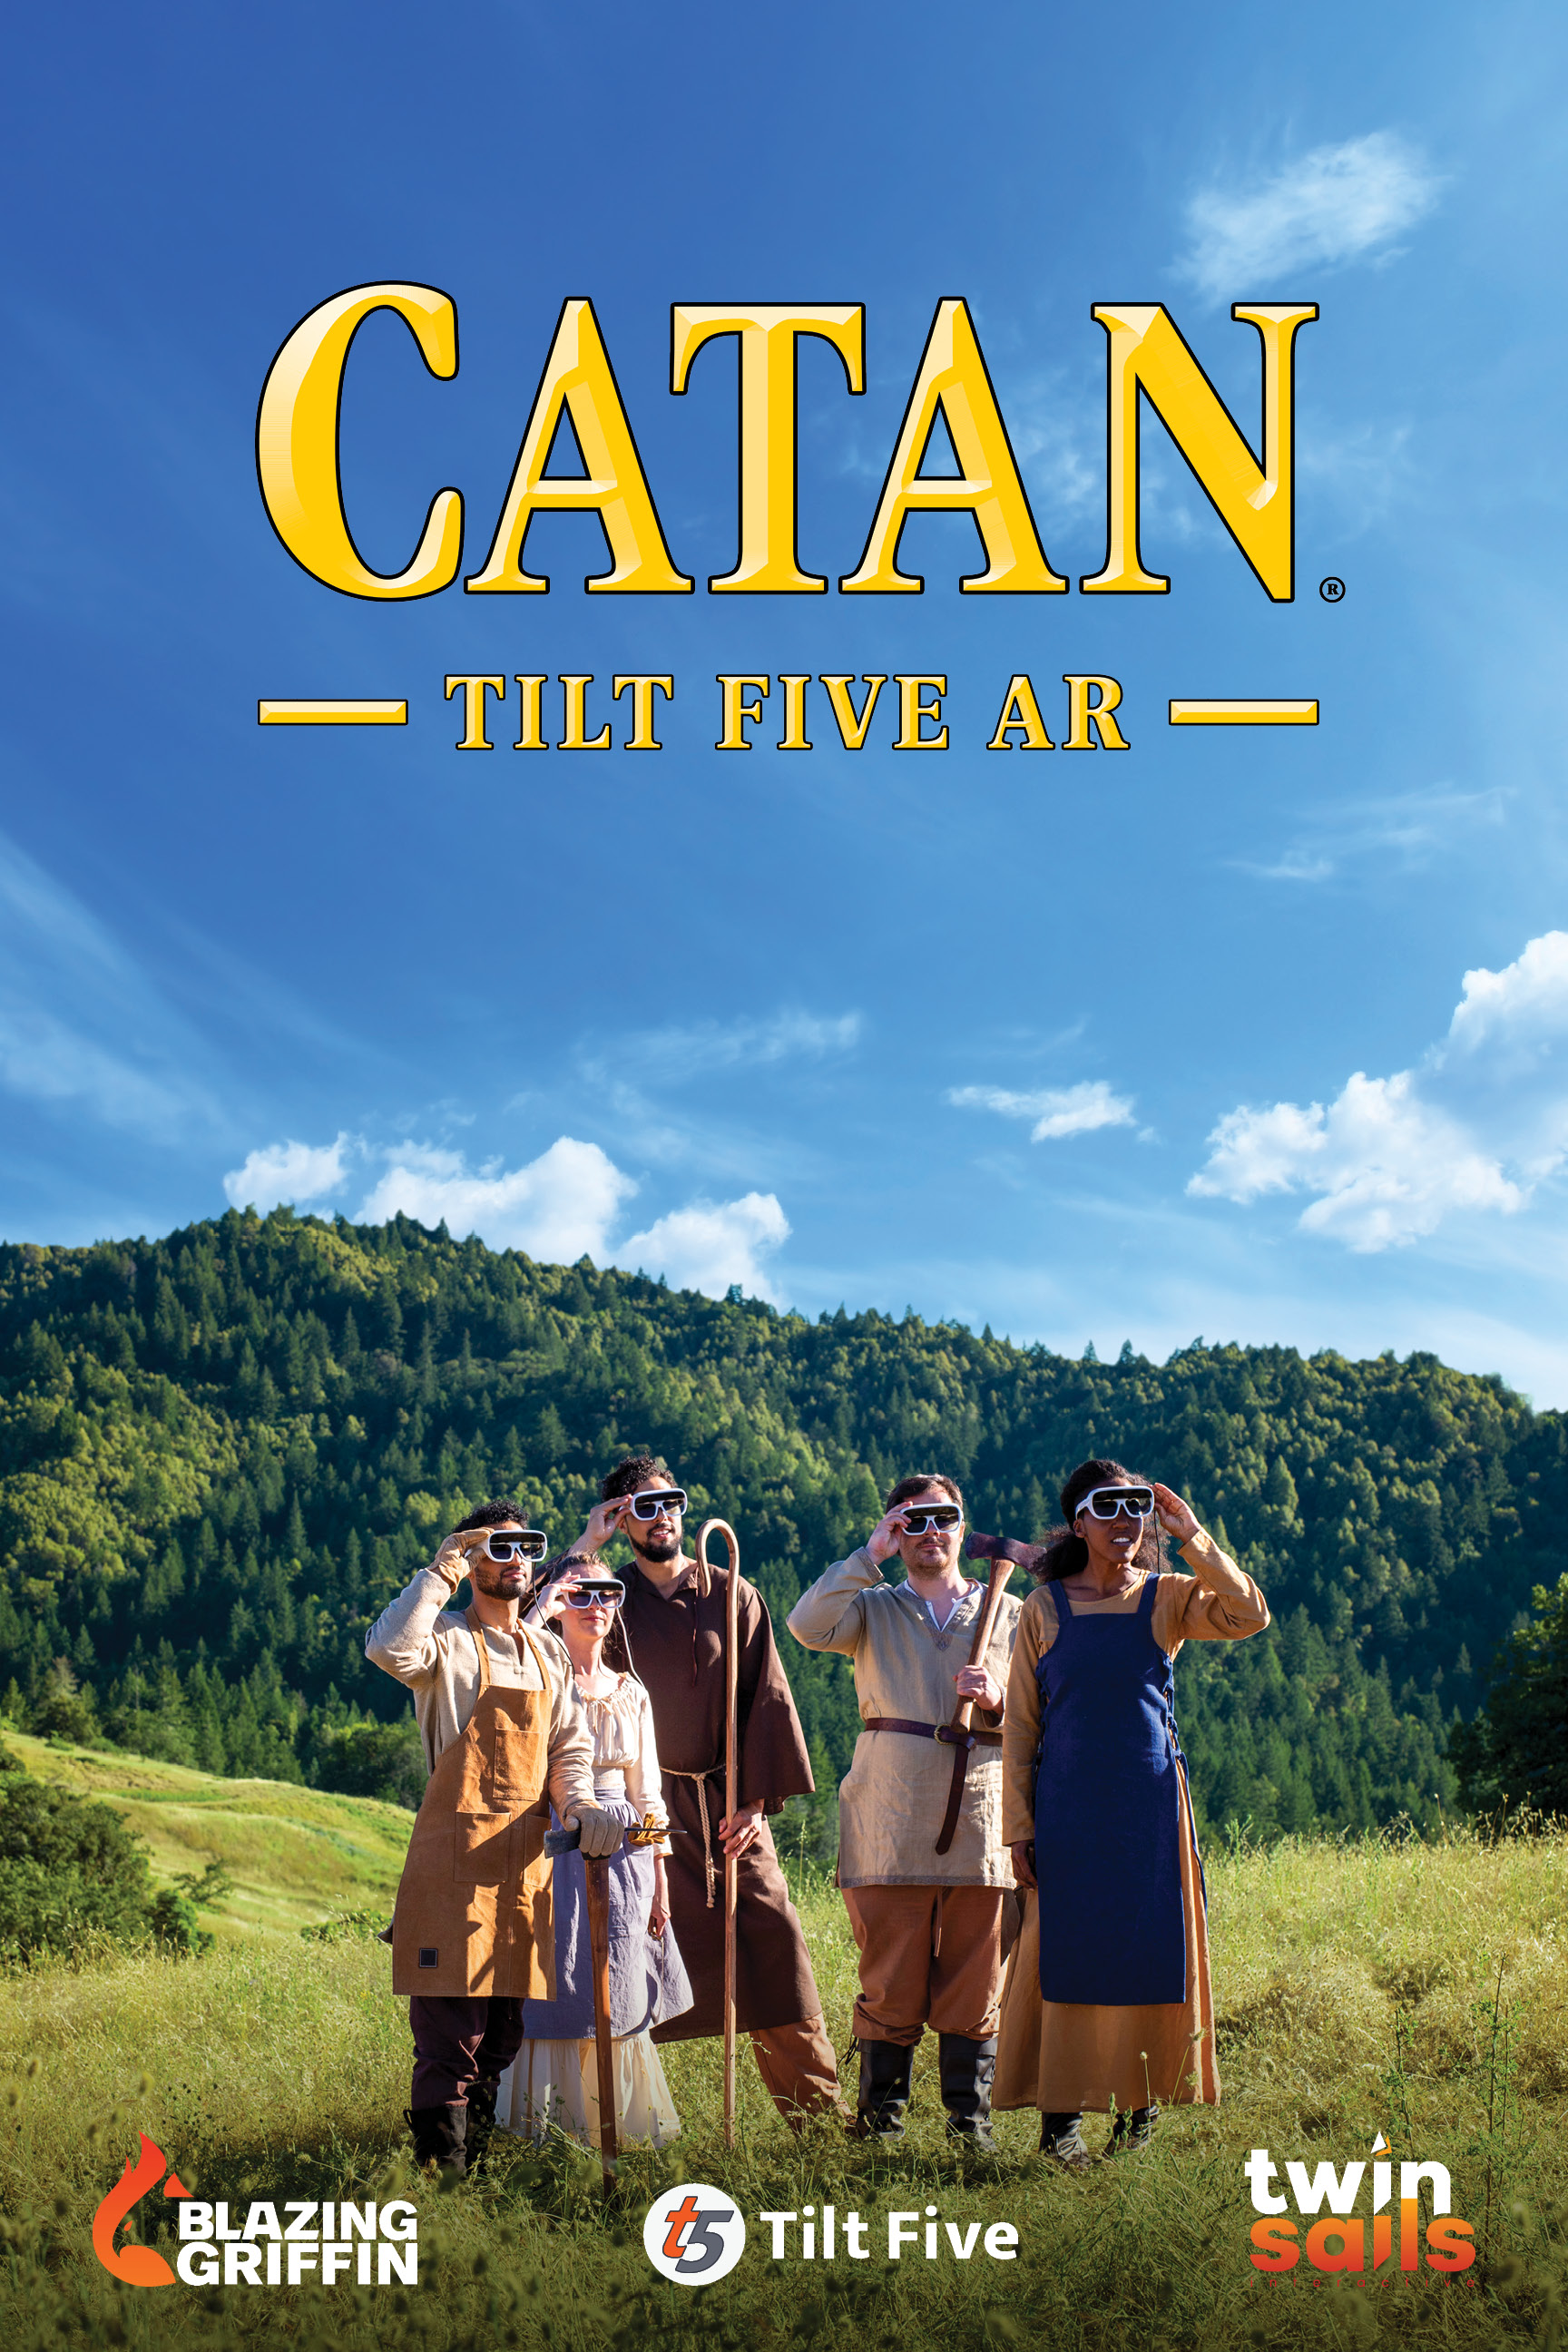 CATAN - Tilt Five AR Coming Spring 2023